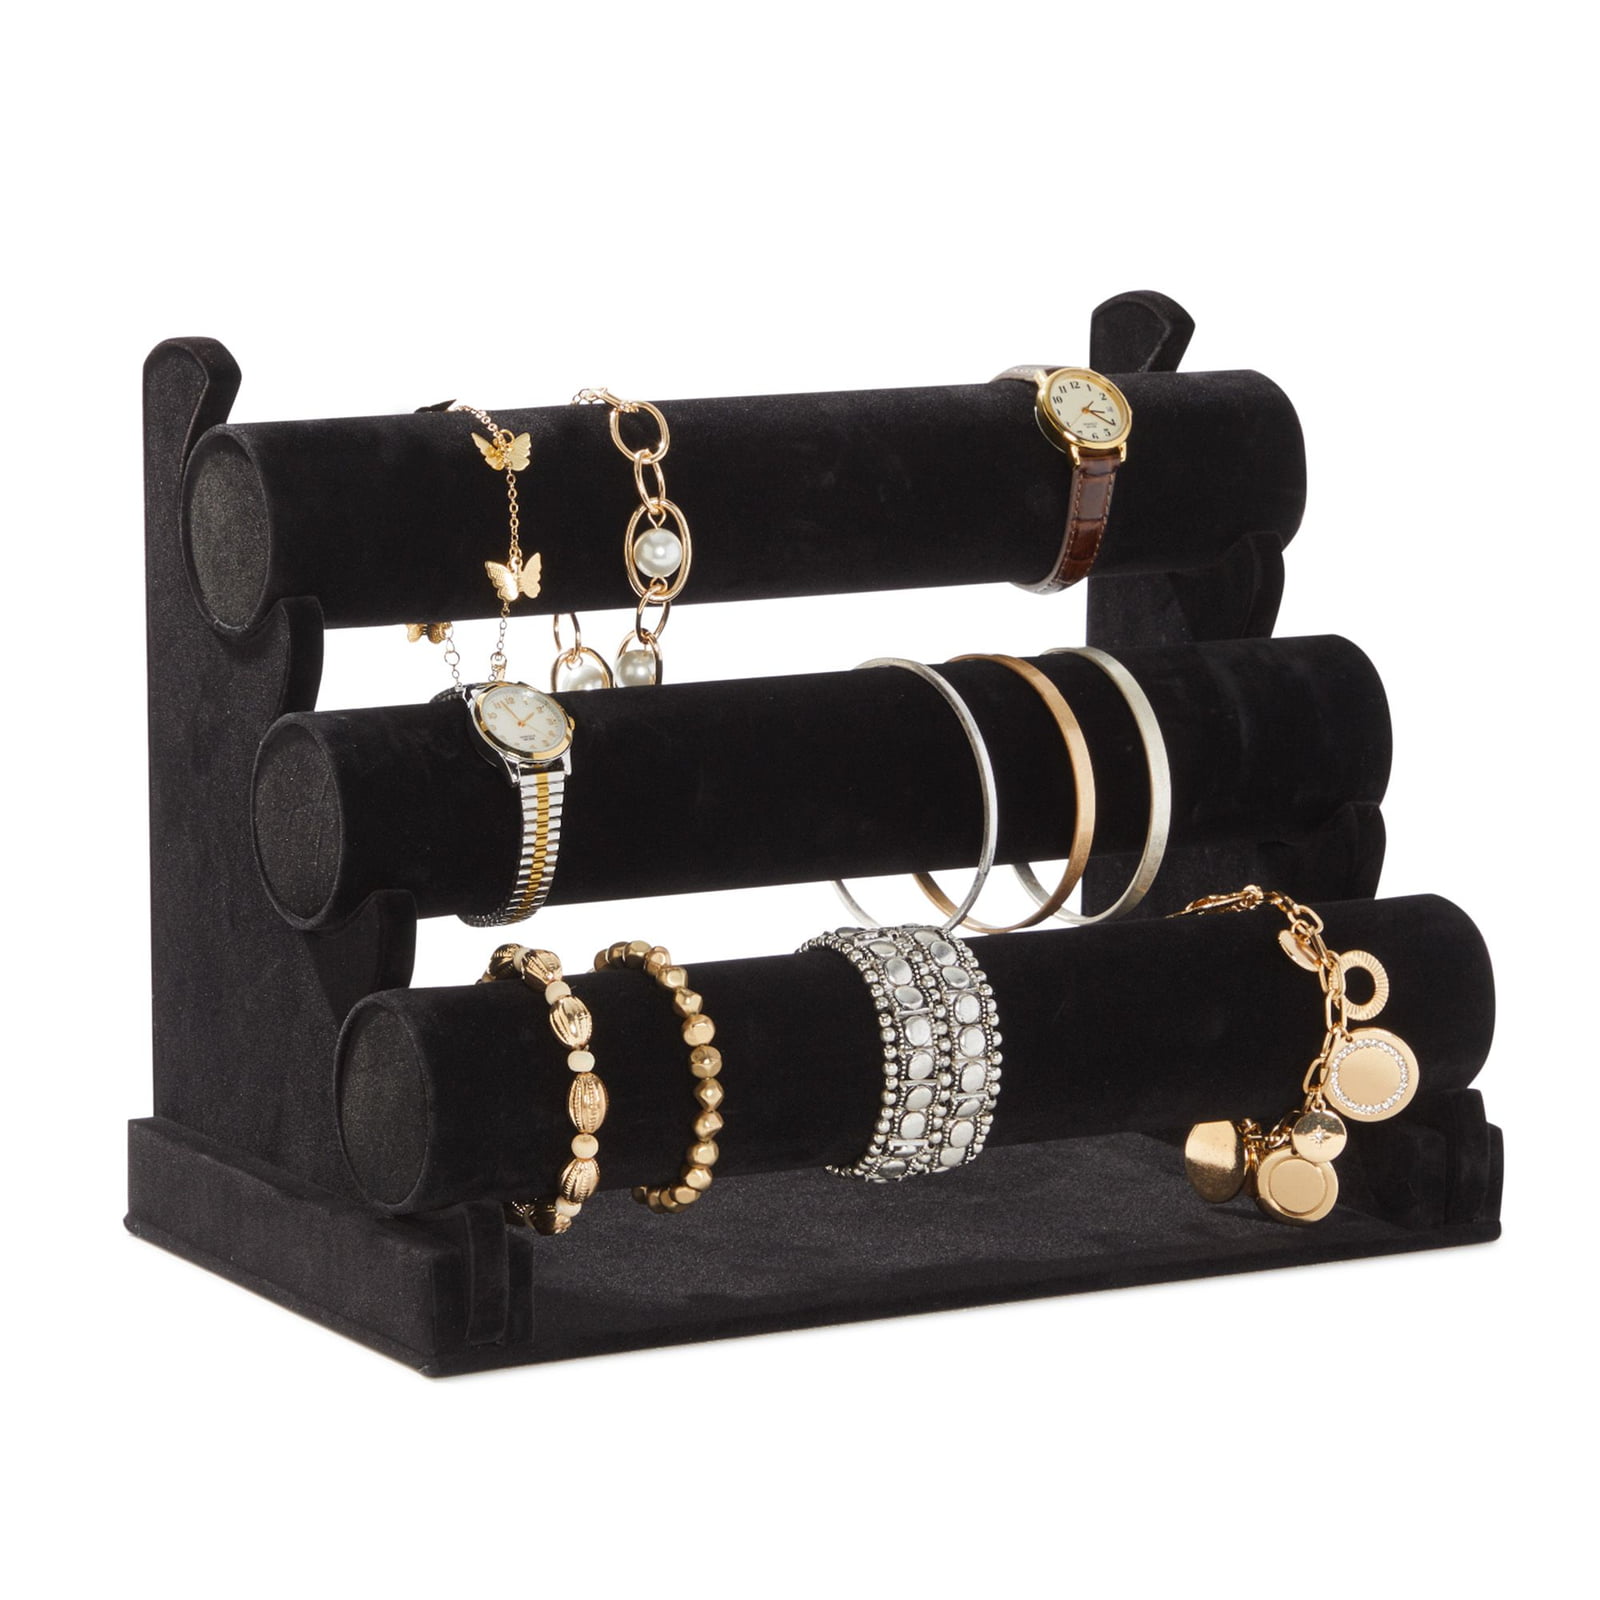 12 Oval Pads Black Velvet 7" x 11" Jewelry Display Necklace Bracelet Showcase 